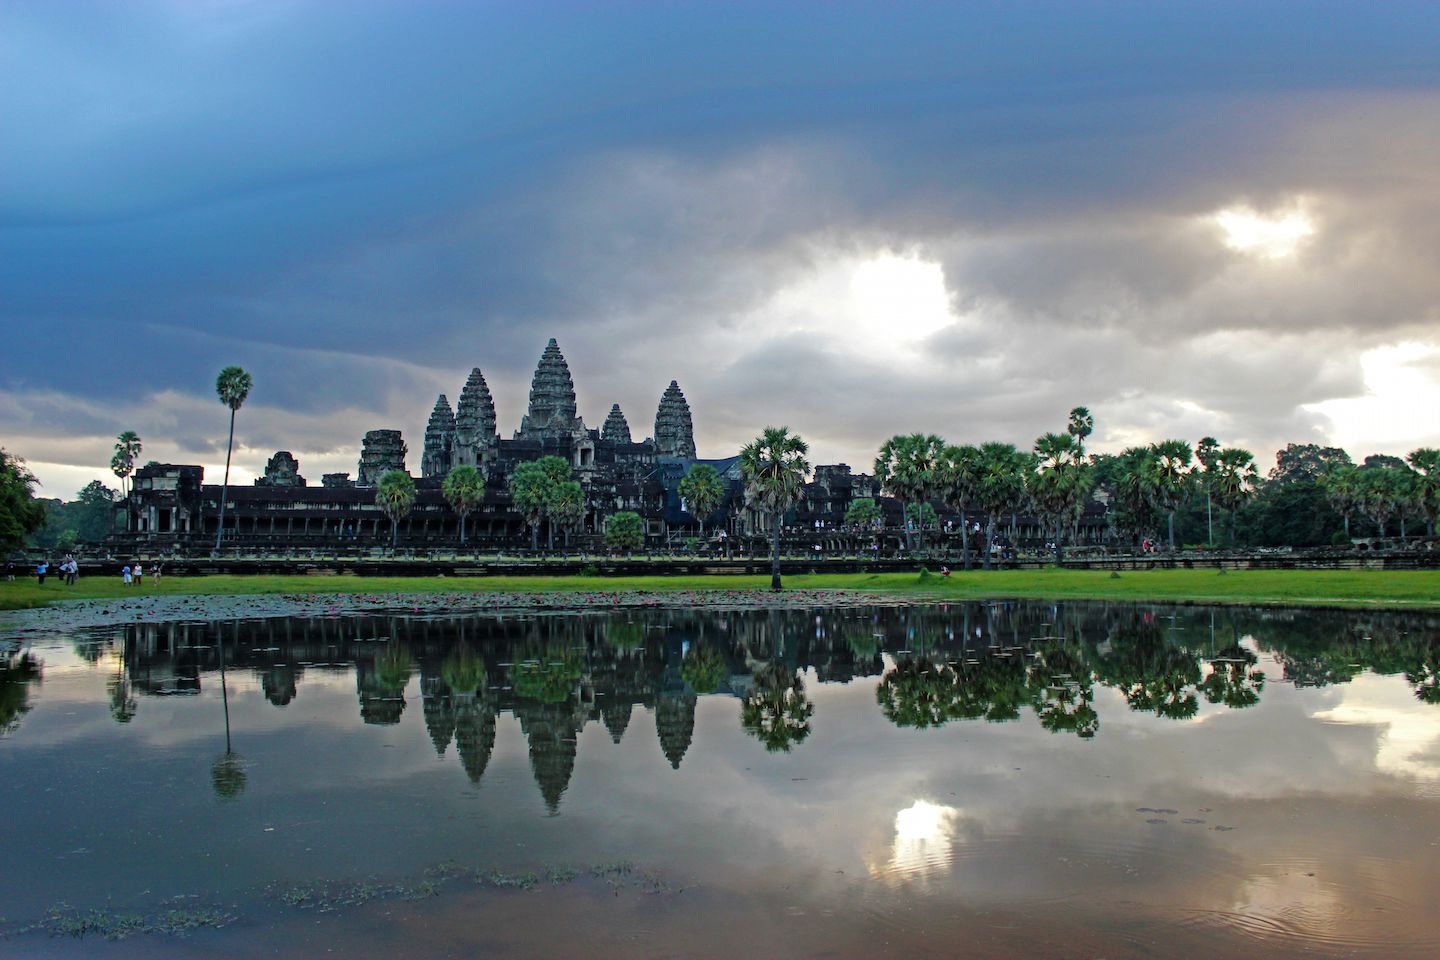 Third attempt: cloudy sunrise over Angkor Wat